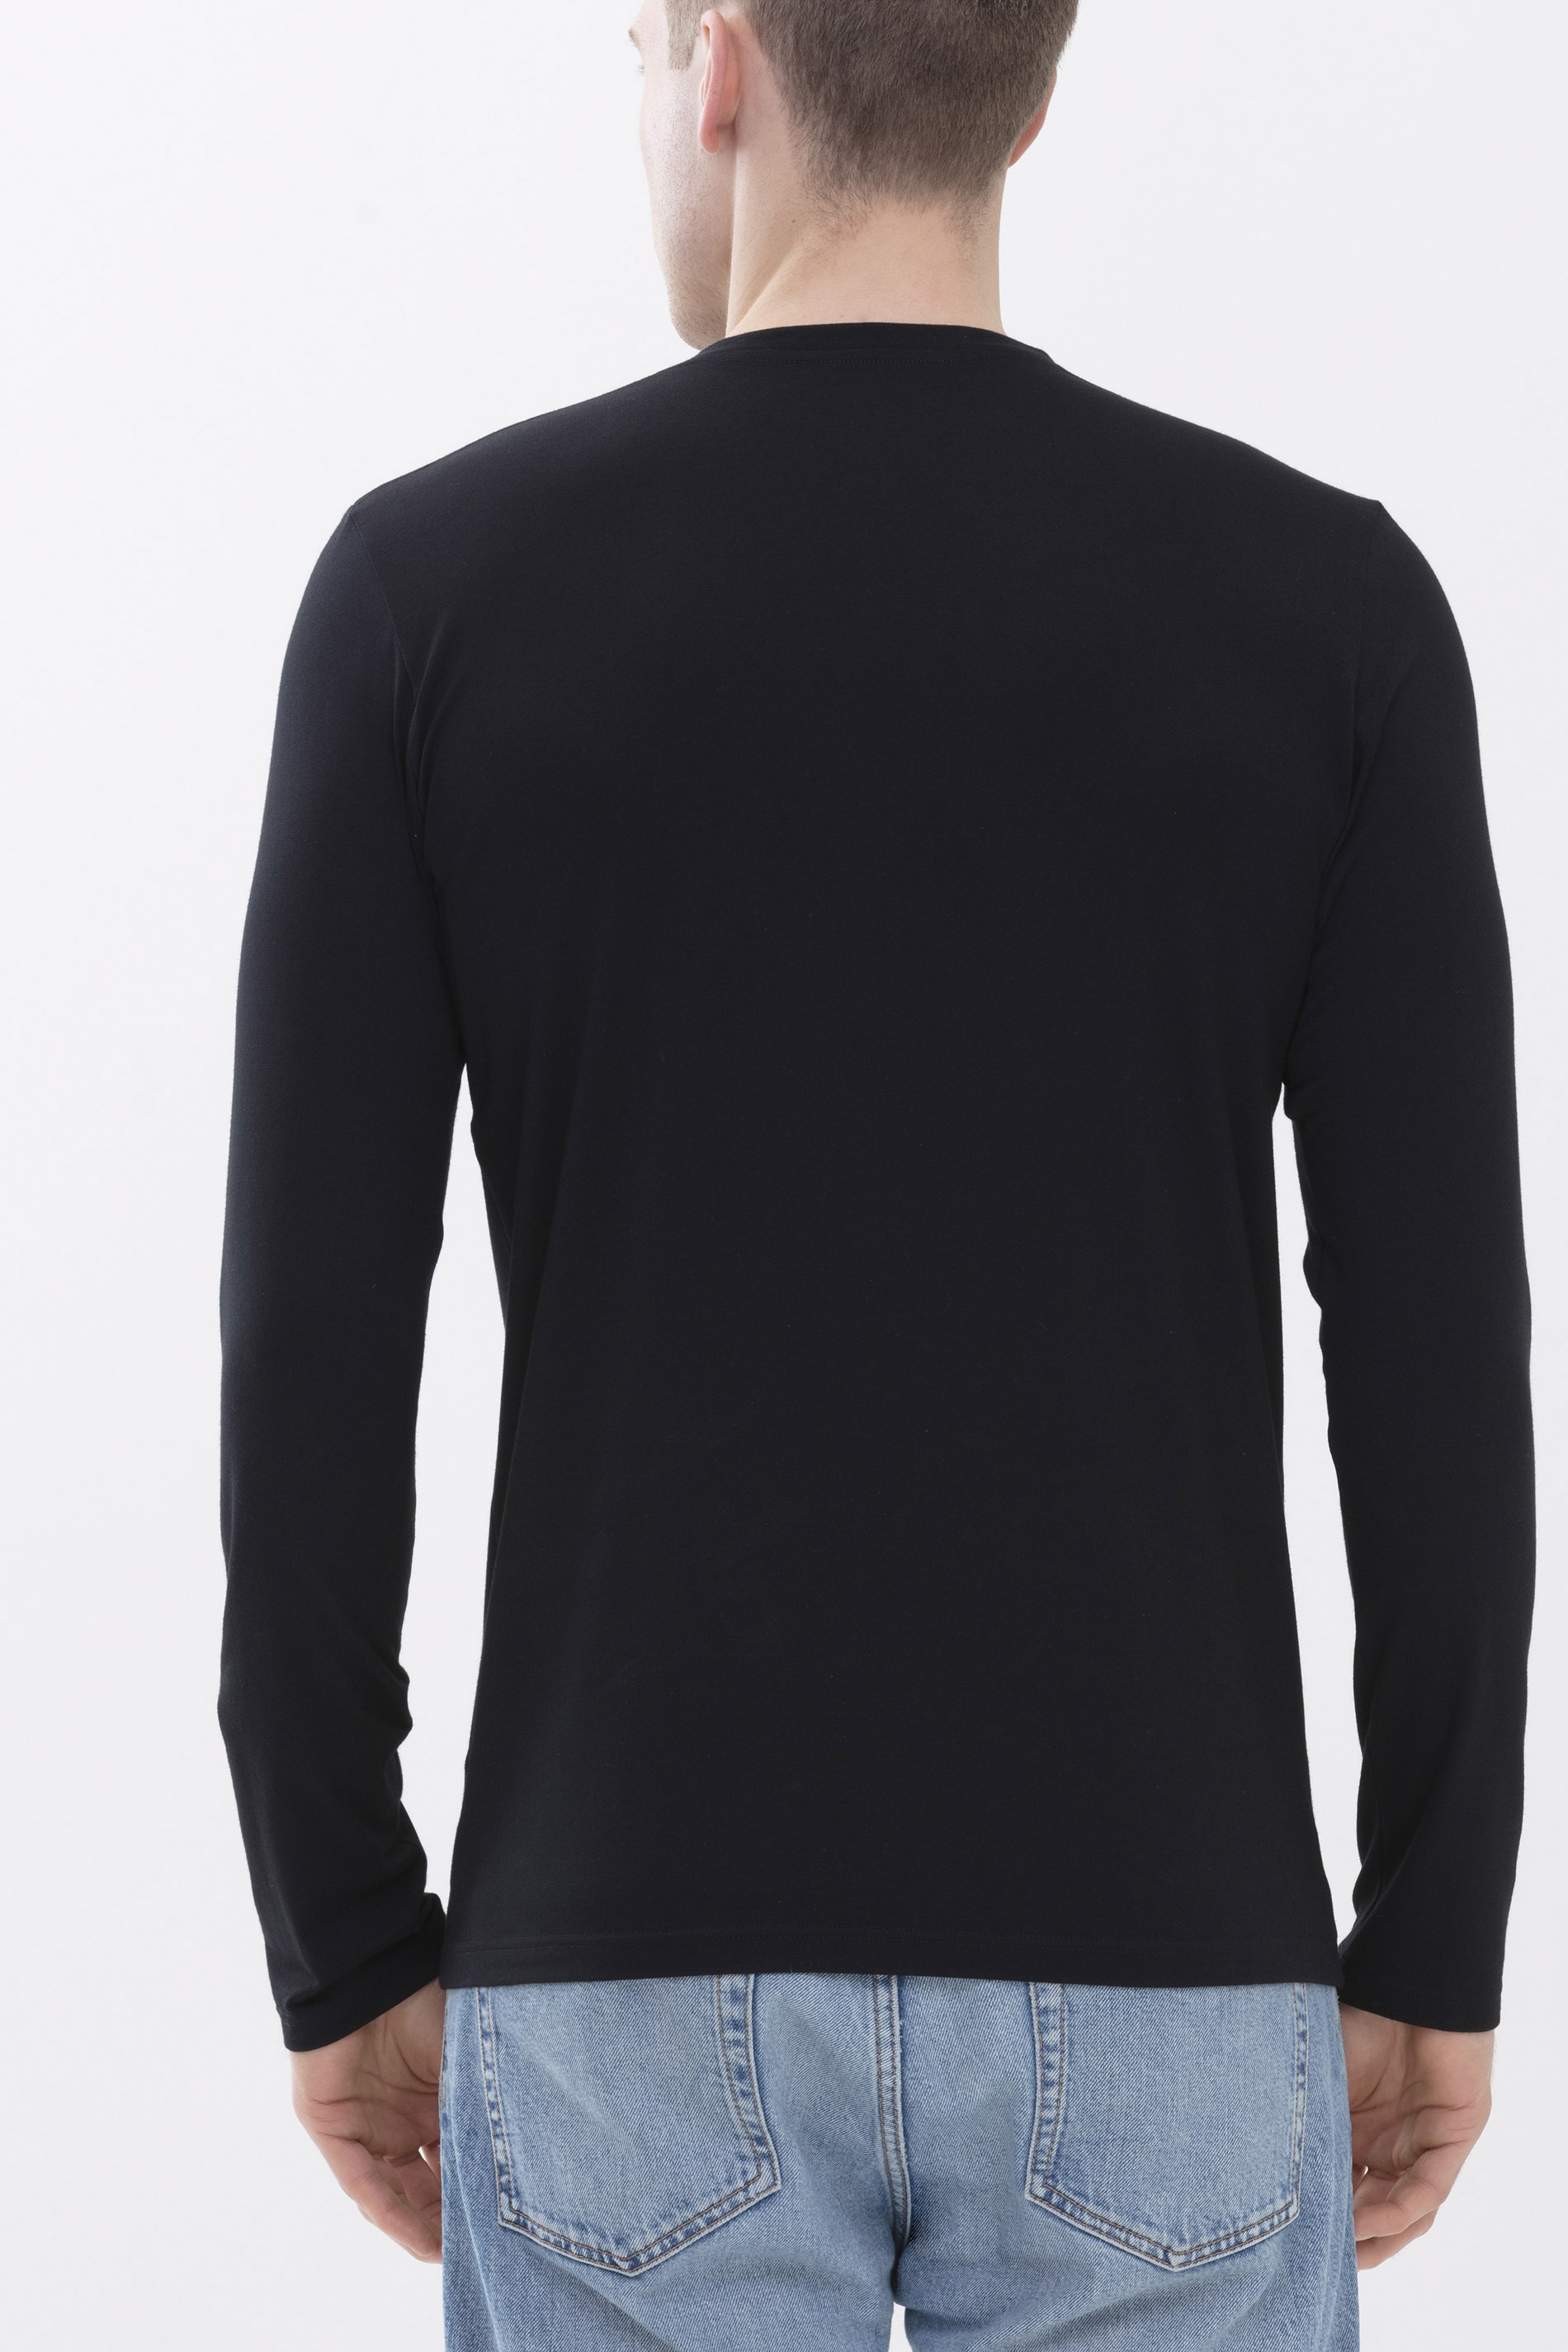 Hybride T-shirt | Lange mouwen Zwart Serie Hybrid T-Shirt Achteraanzicht | mey®